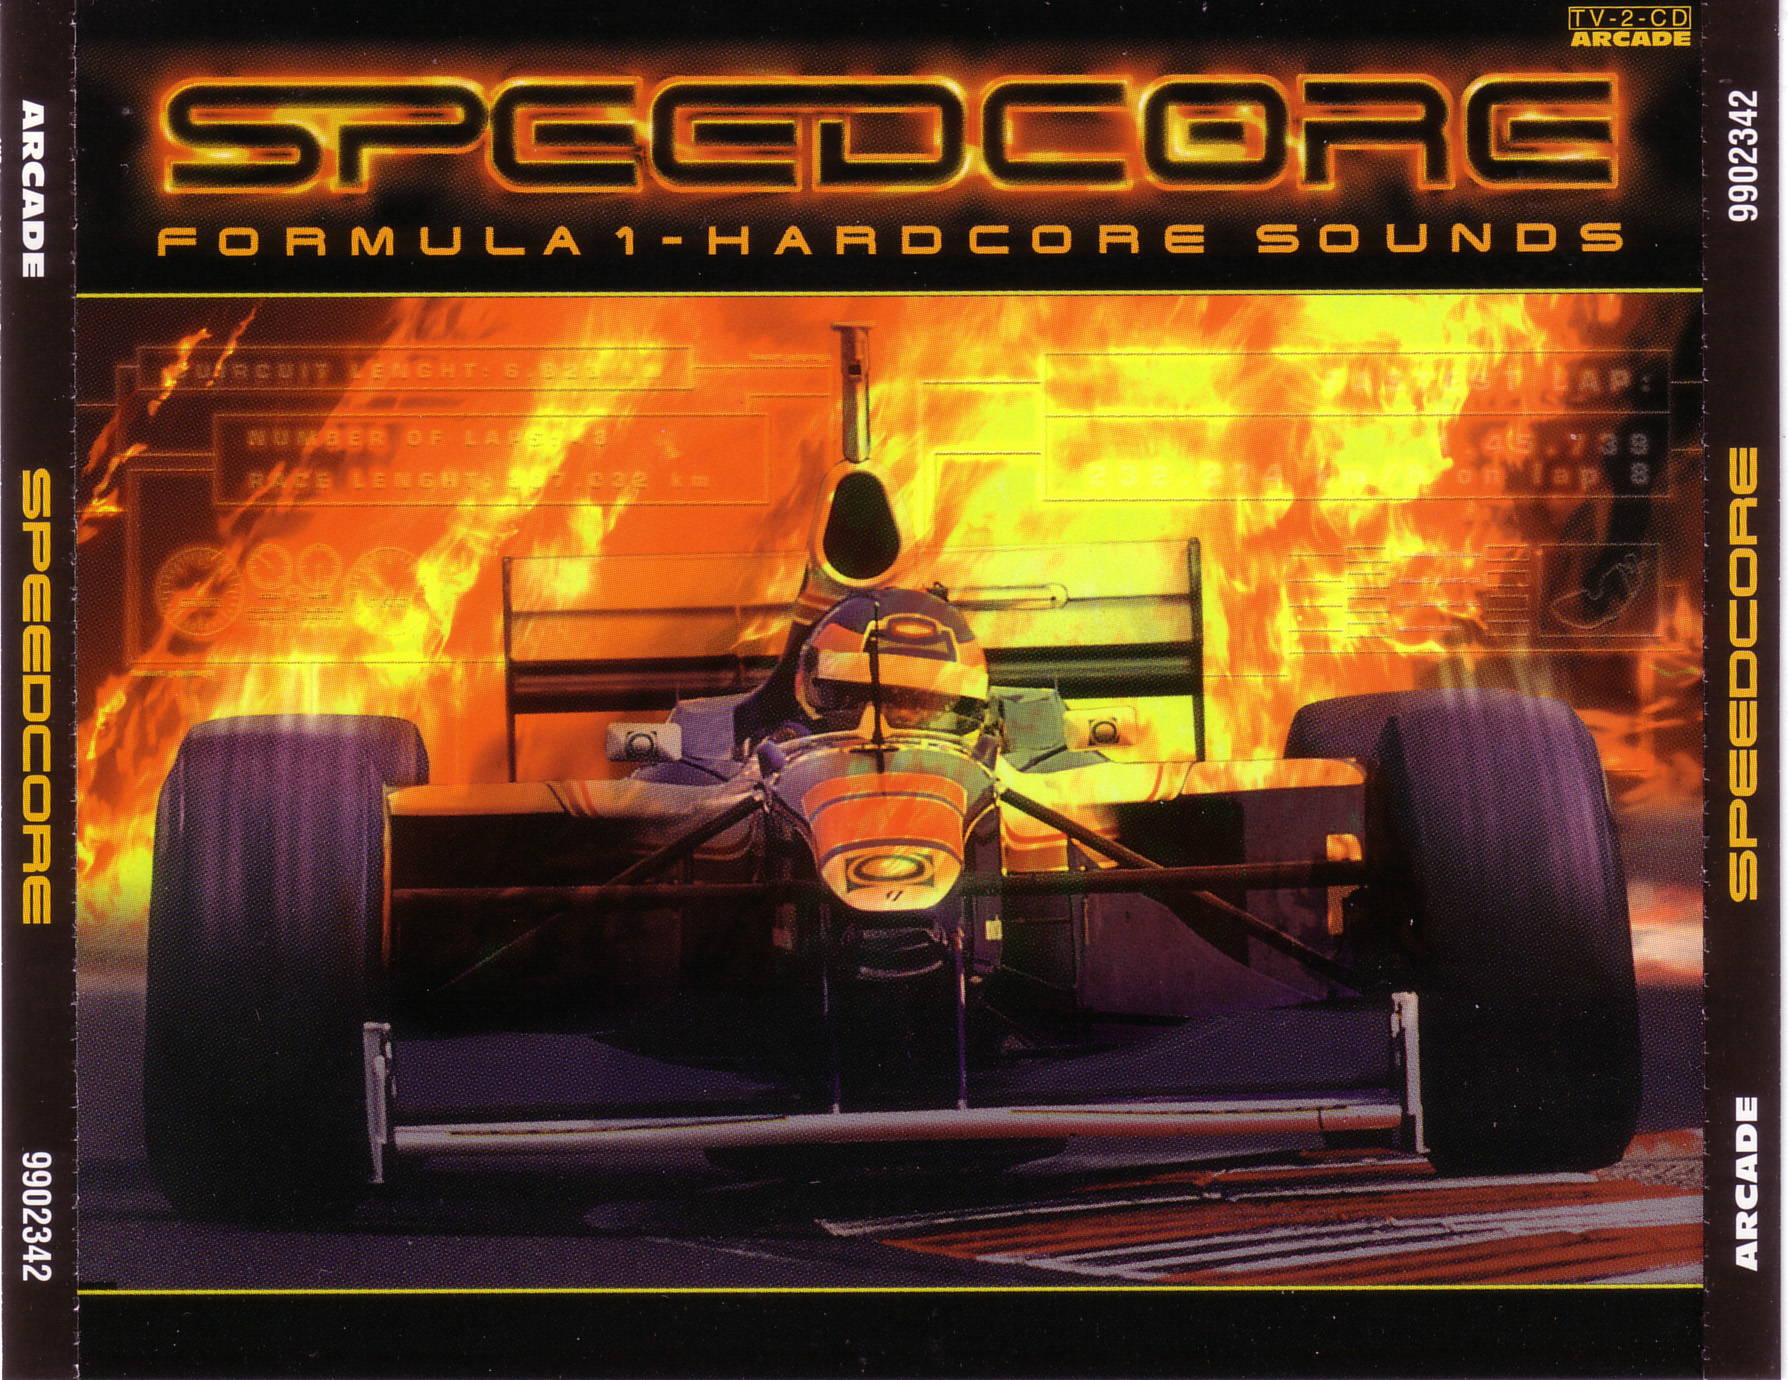 Speedcore - Formula 1 Hardcore Sounds (2CD) (1997) [Arcade]